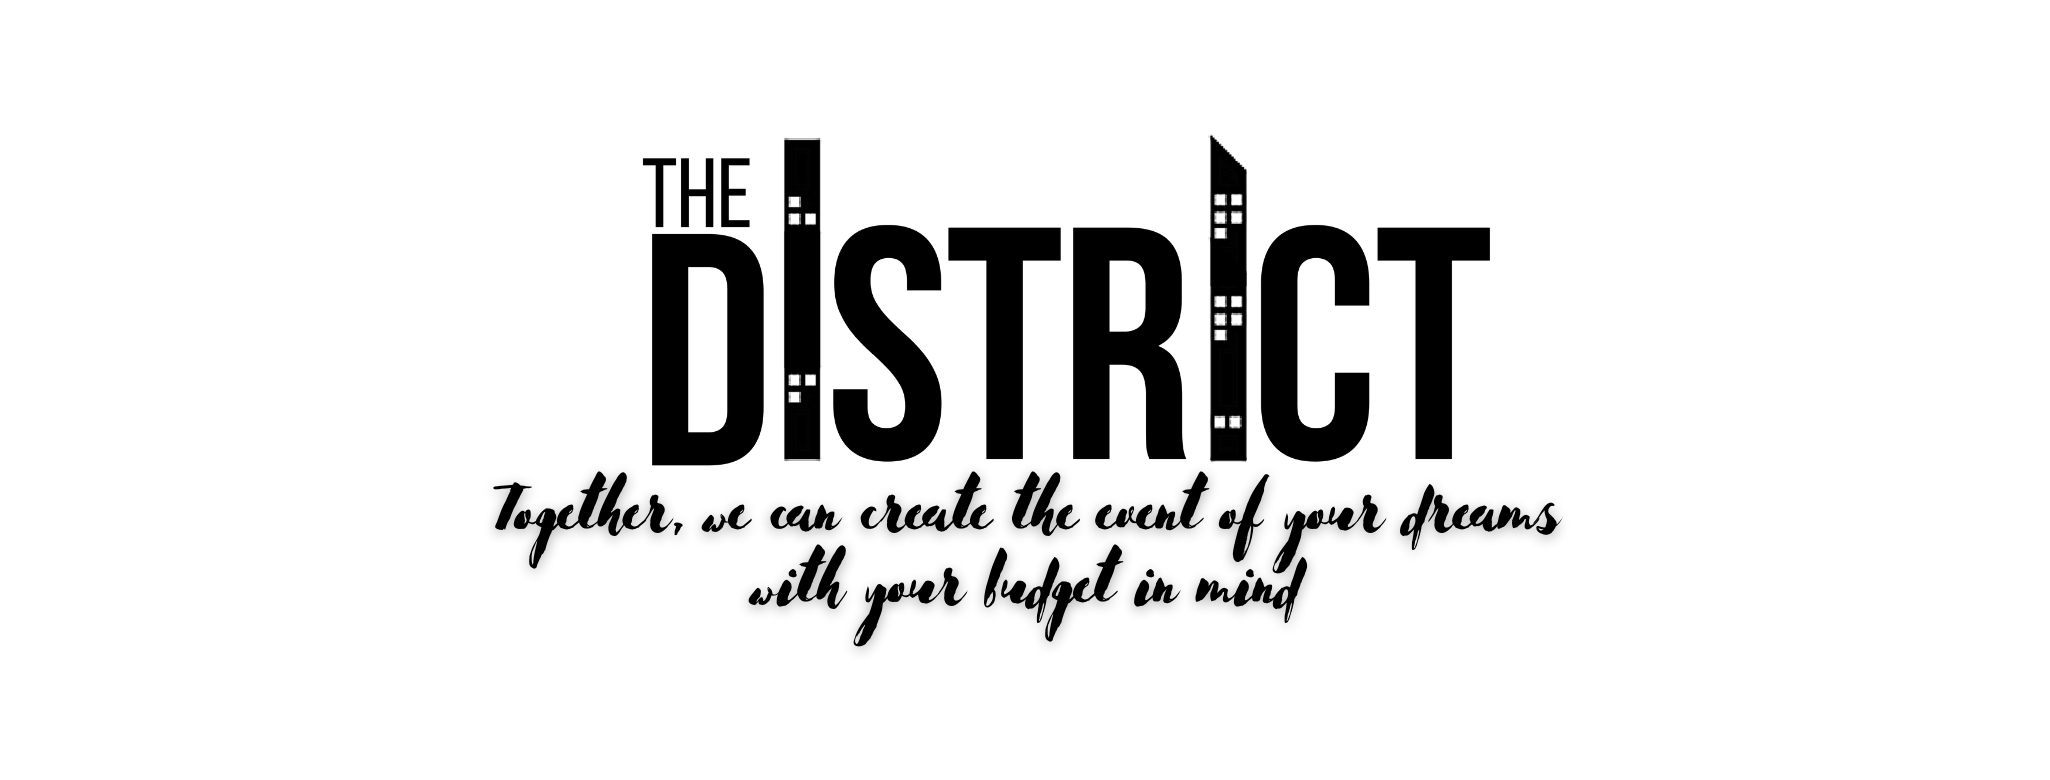 Copy of Copy of District Event Venue - Logo (1).png